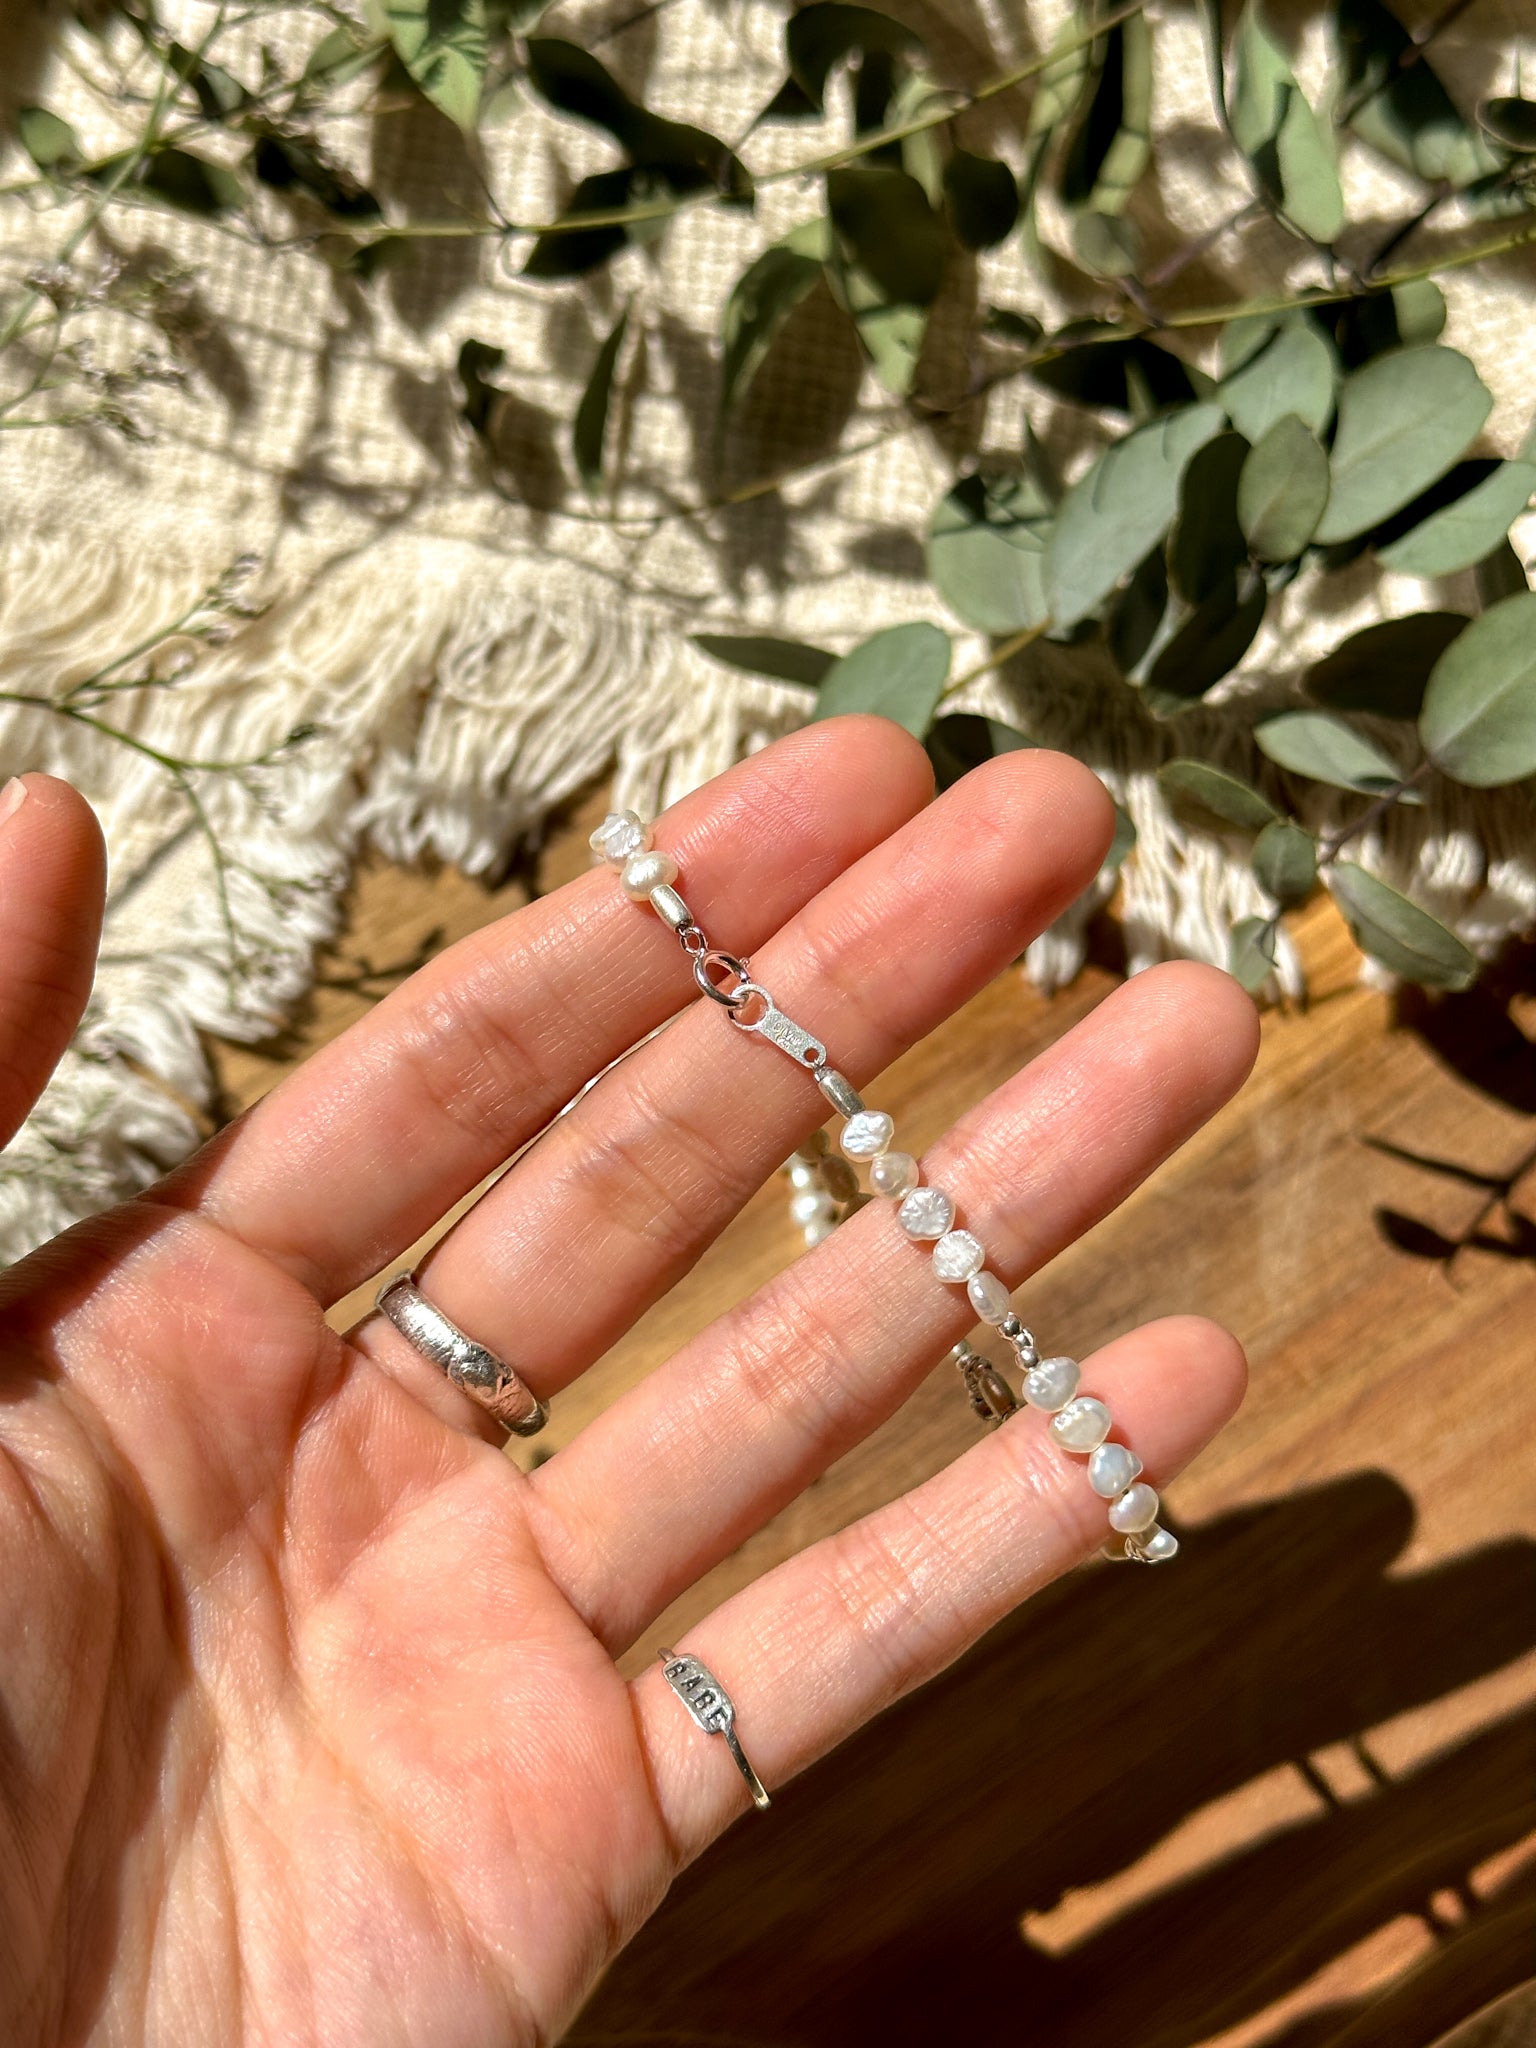 ＊UNISEX pearl & karen silver necklace